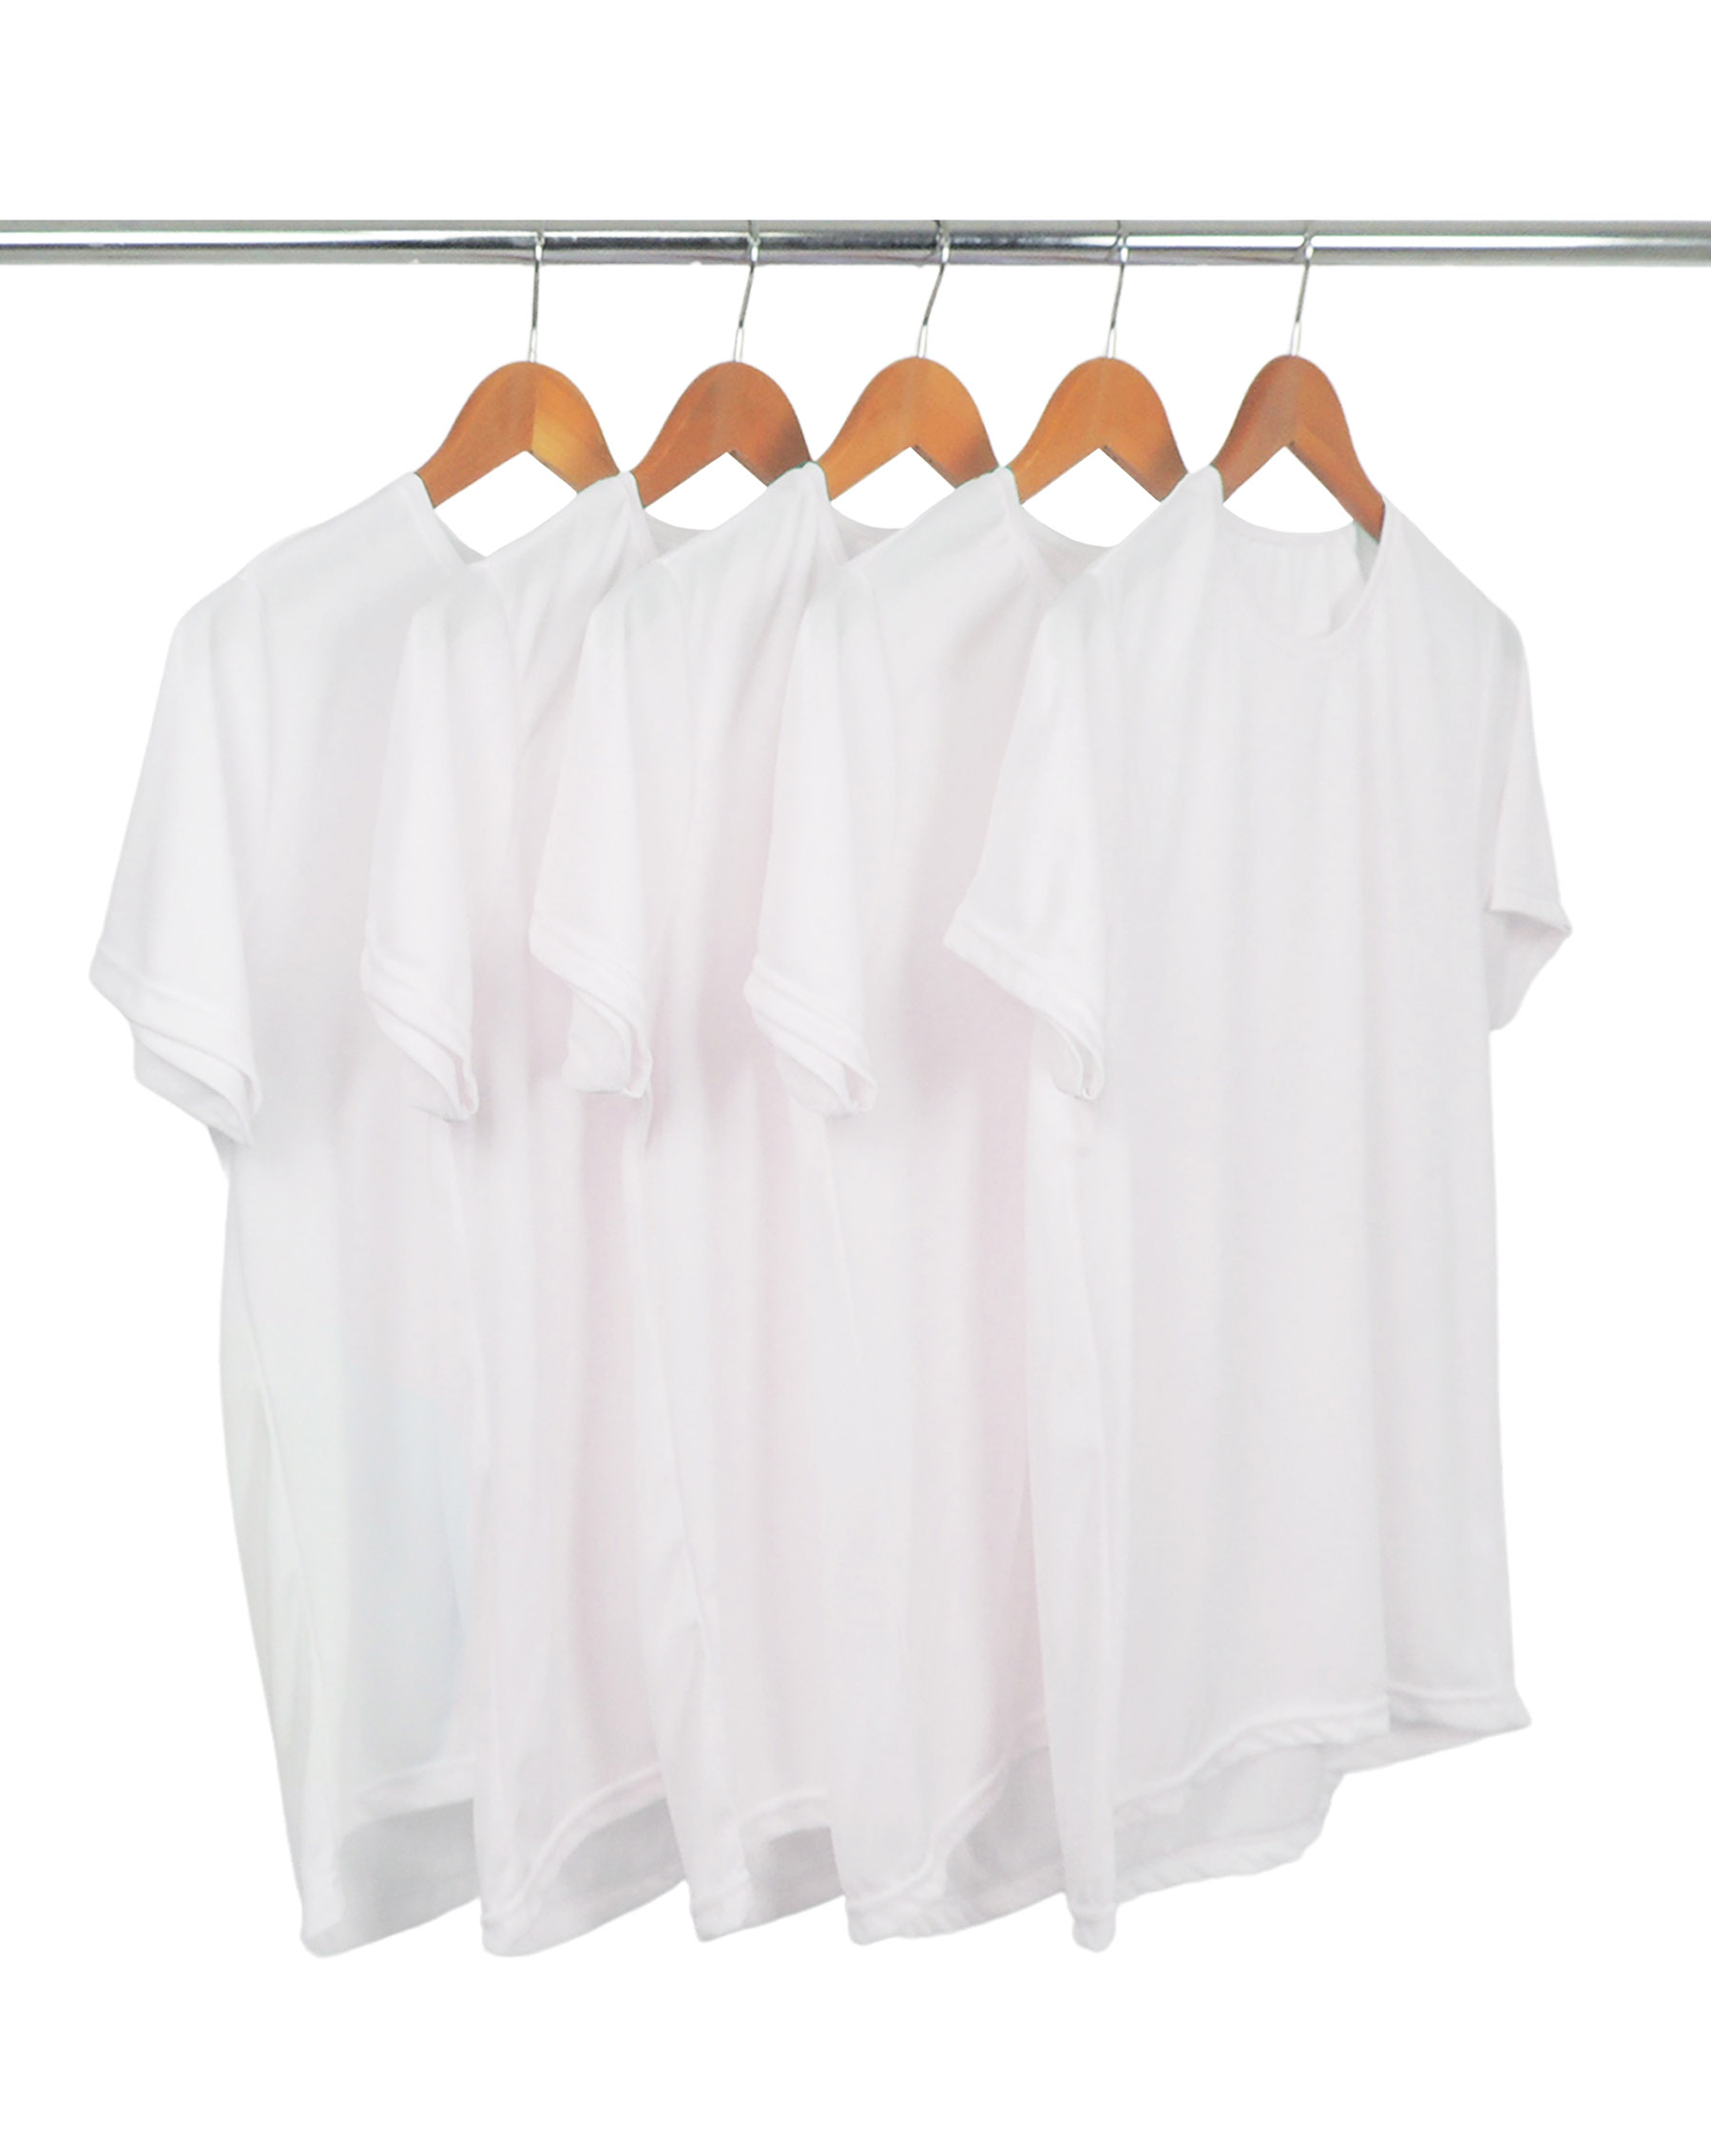 KIT 5 Camisetas Dry Fit Brancas Proteção UV 30+